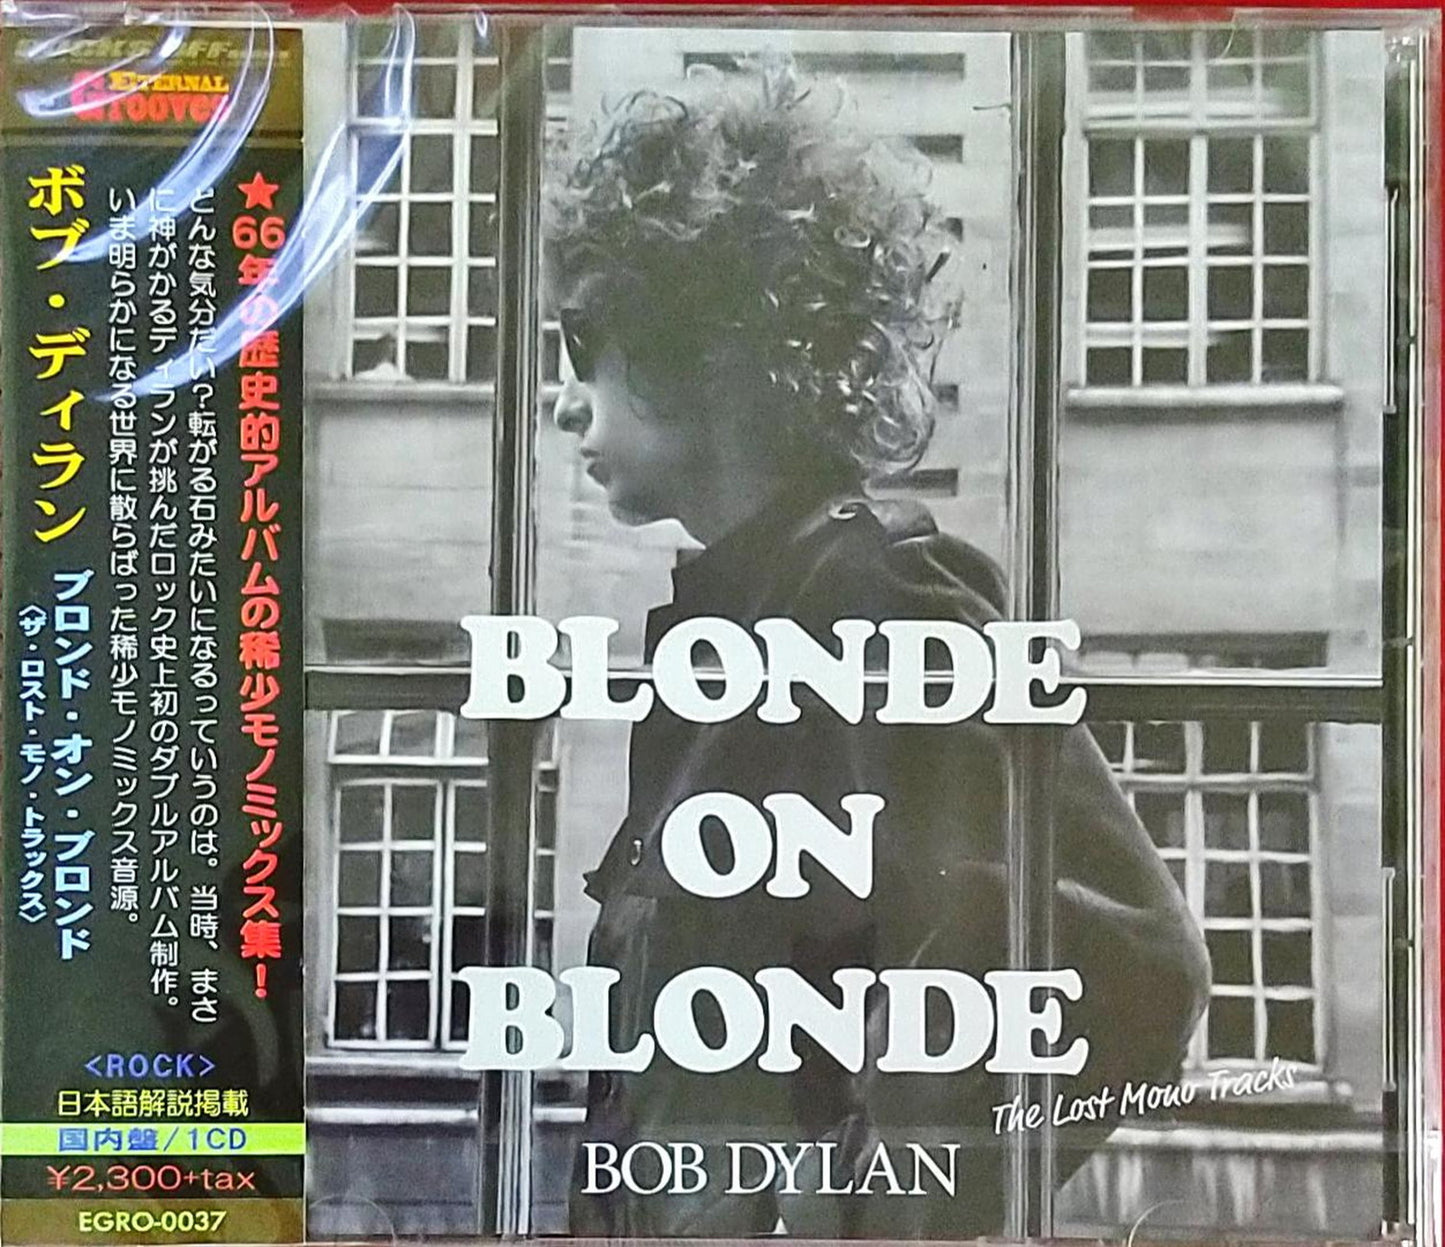 Bob Dylan - Blonde On Blonde <The Lost Mono Tracks> - Japan CD